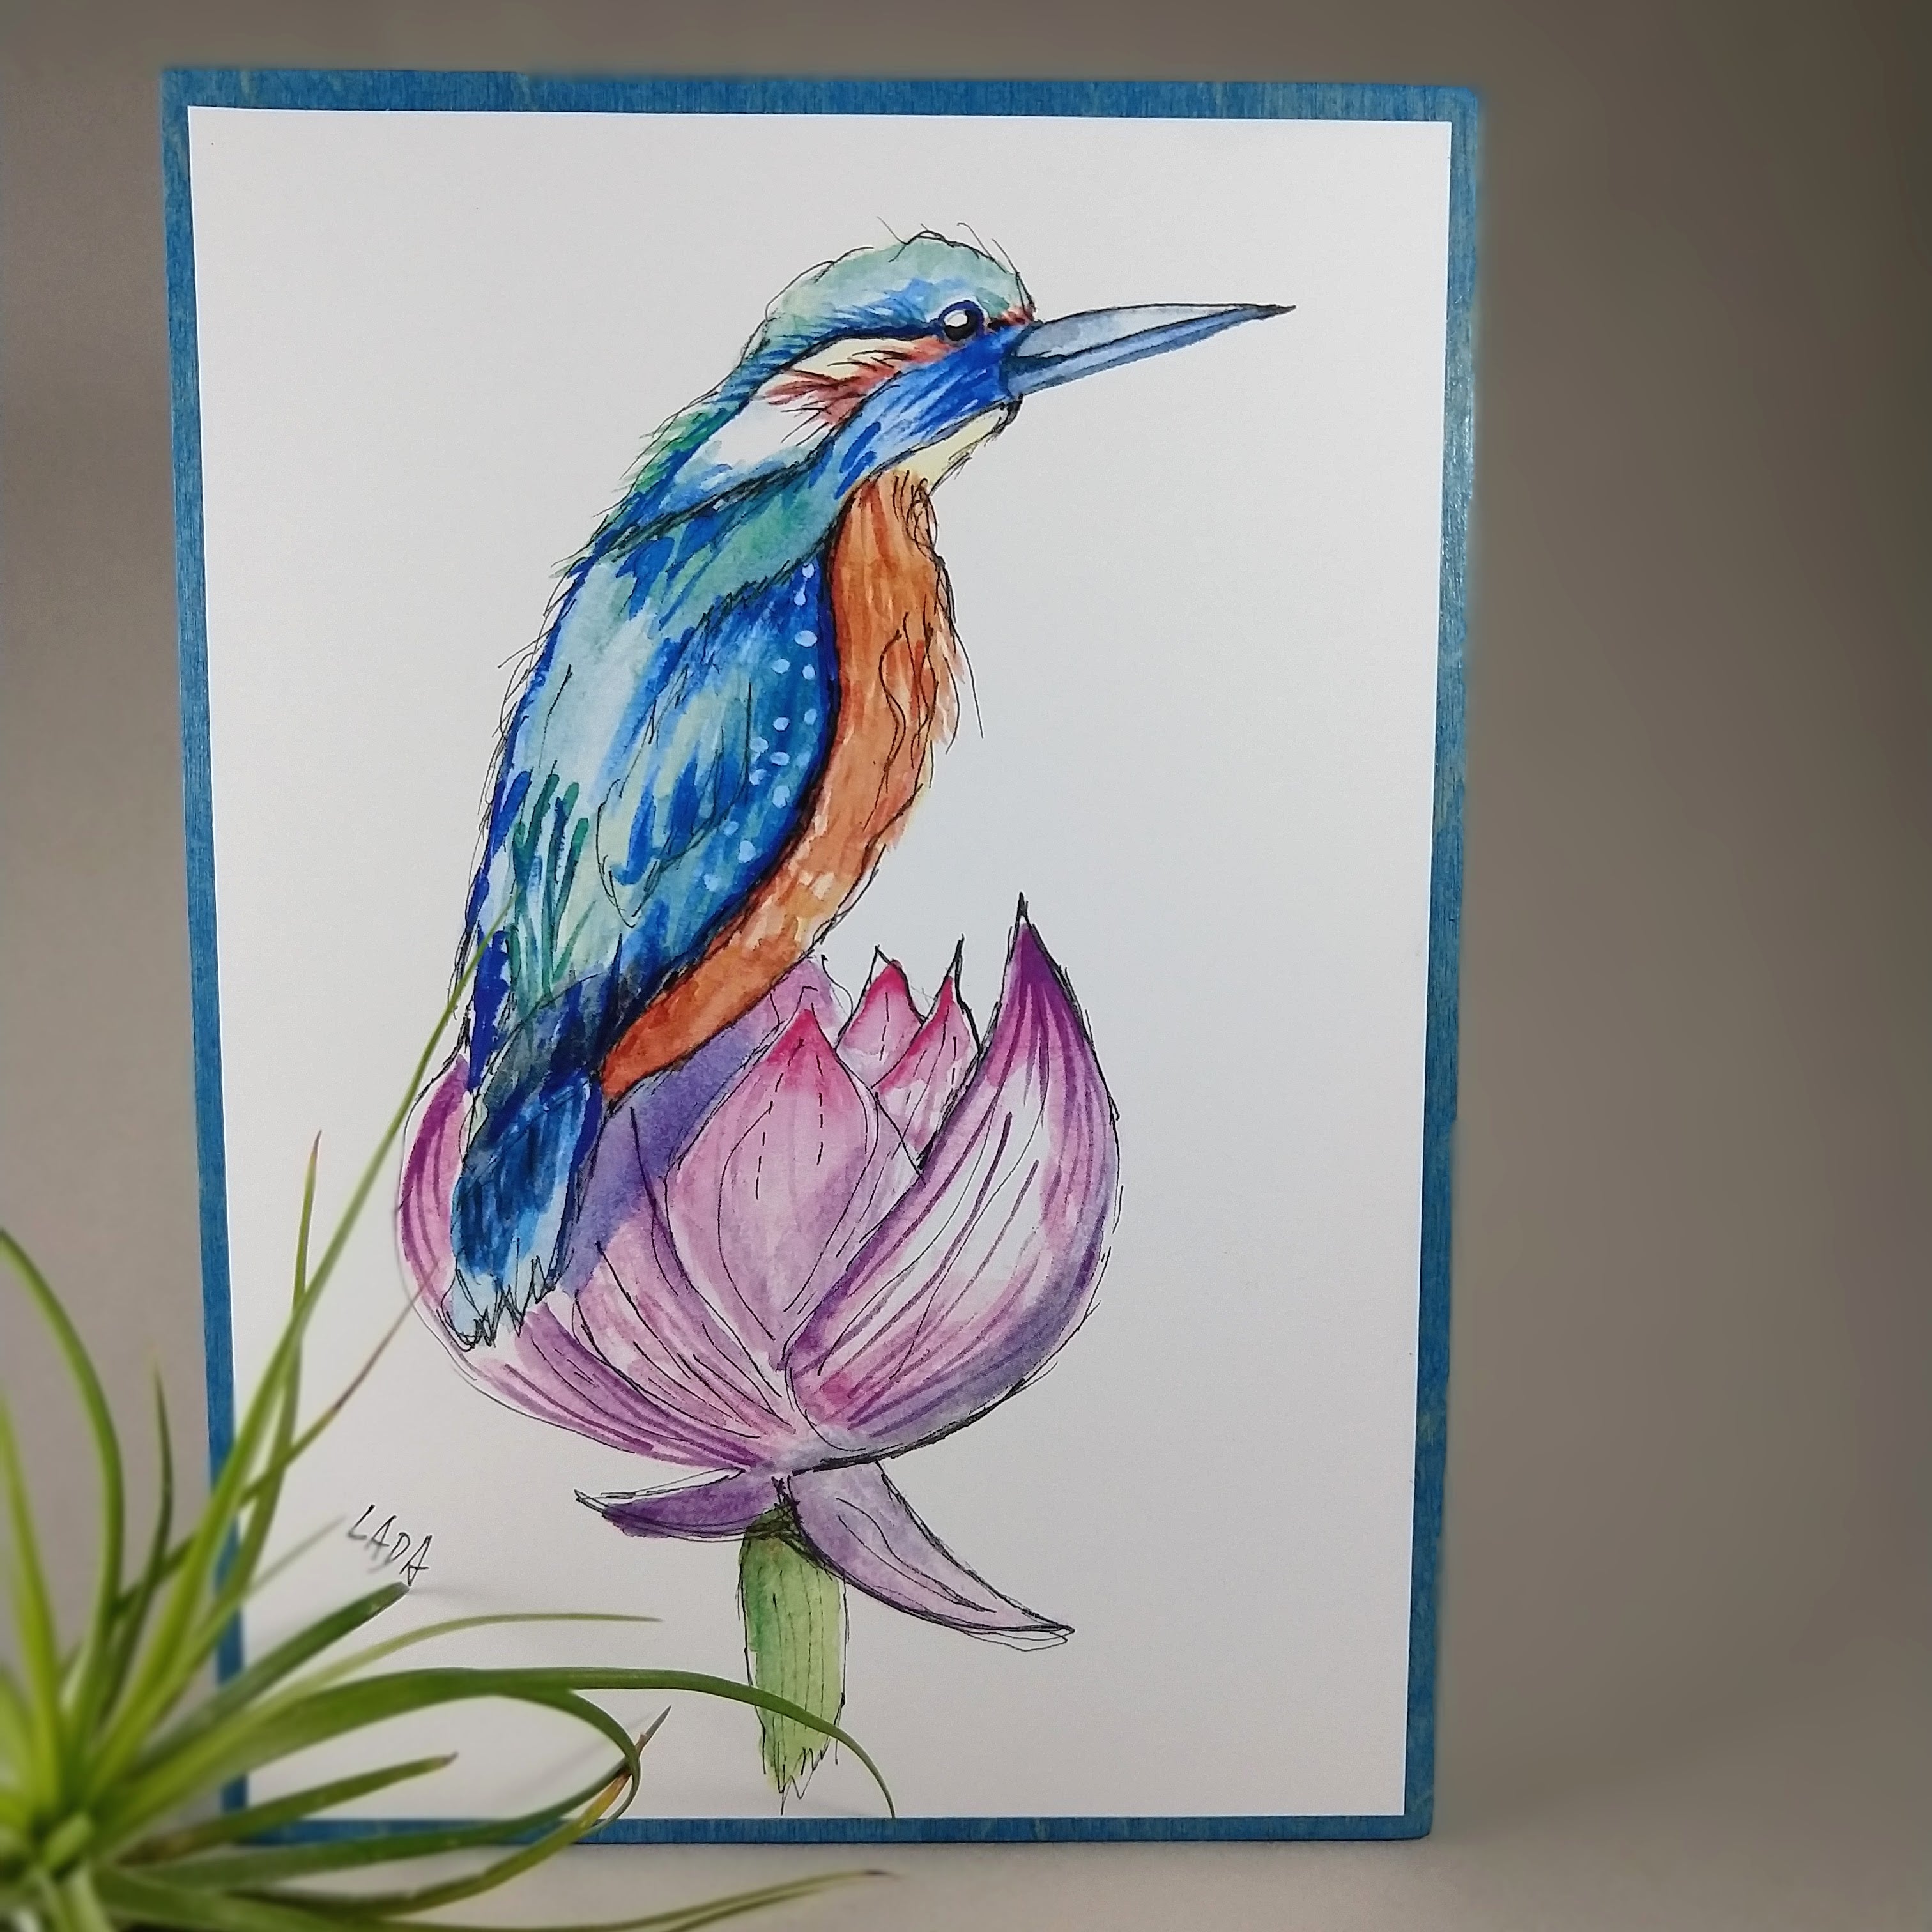 827 Kingfisher Sketch Images, Stock Photos & Vectors | Shutterstock